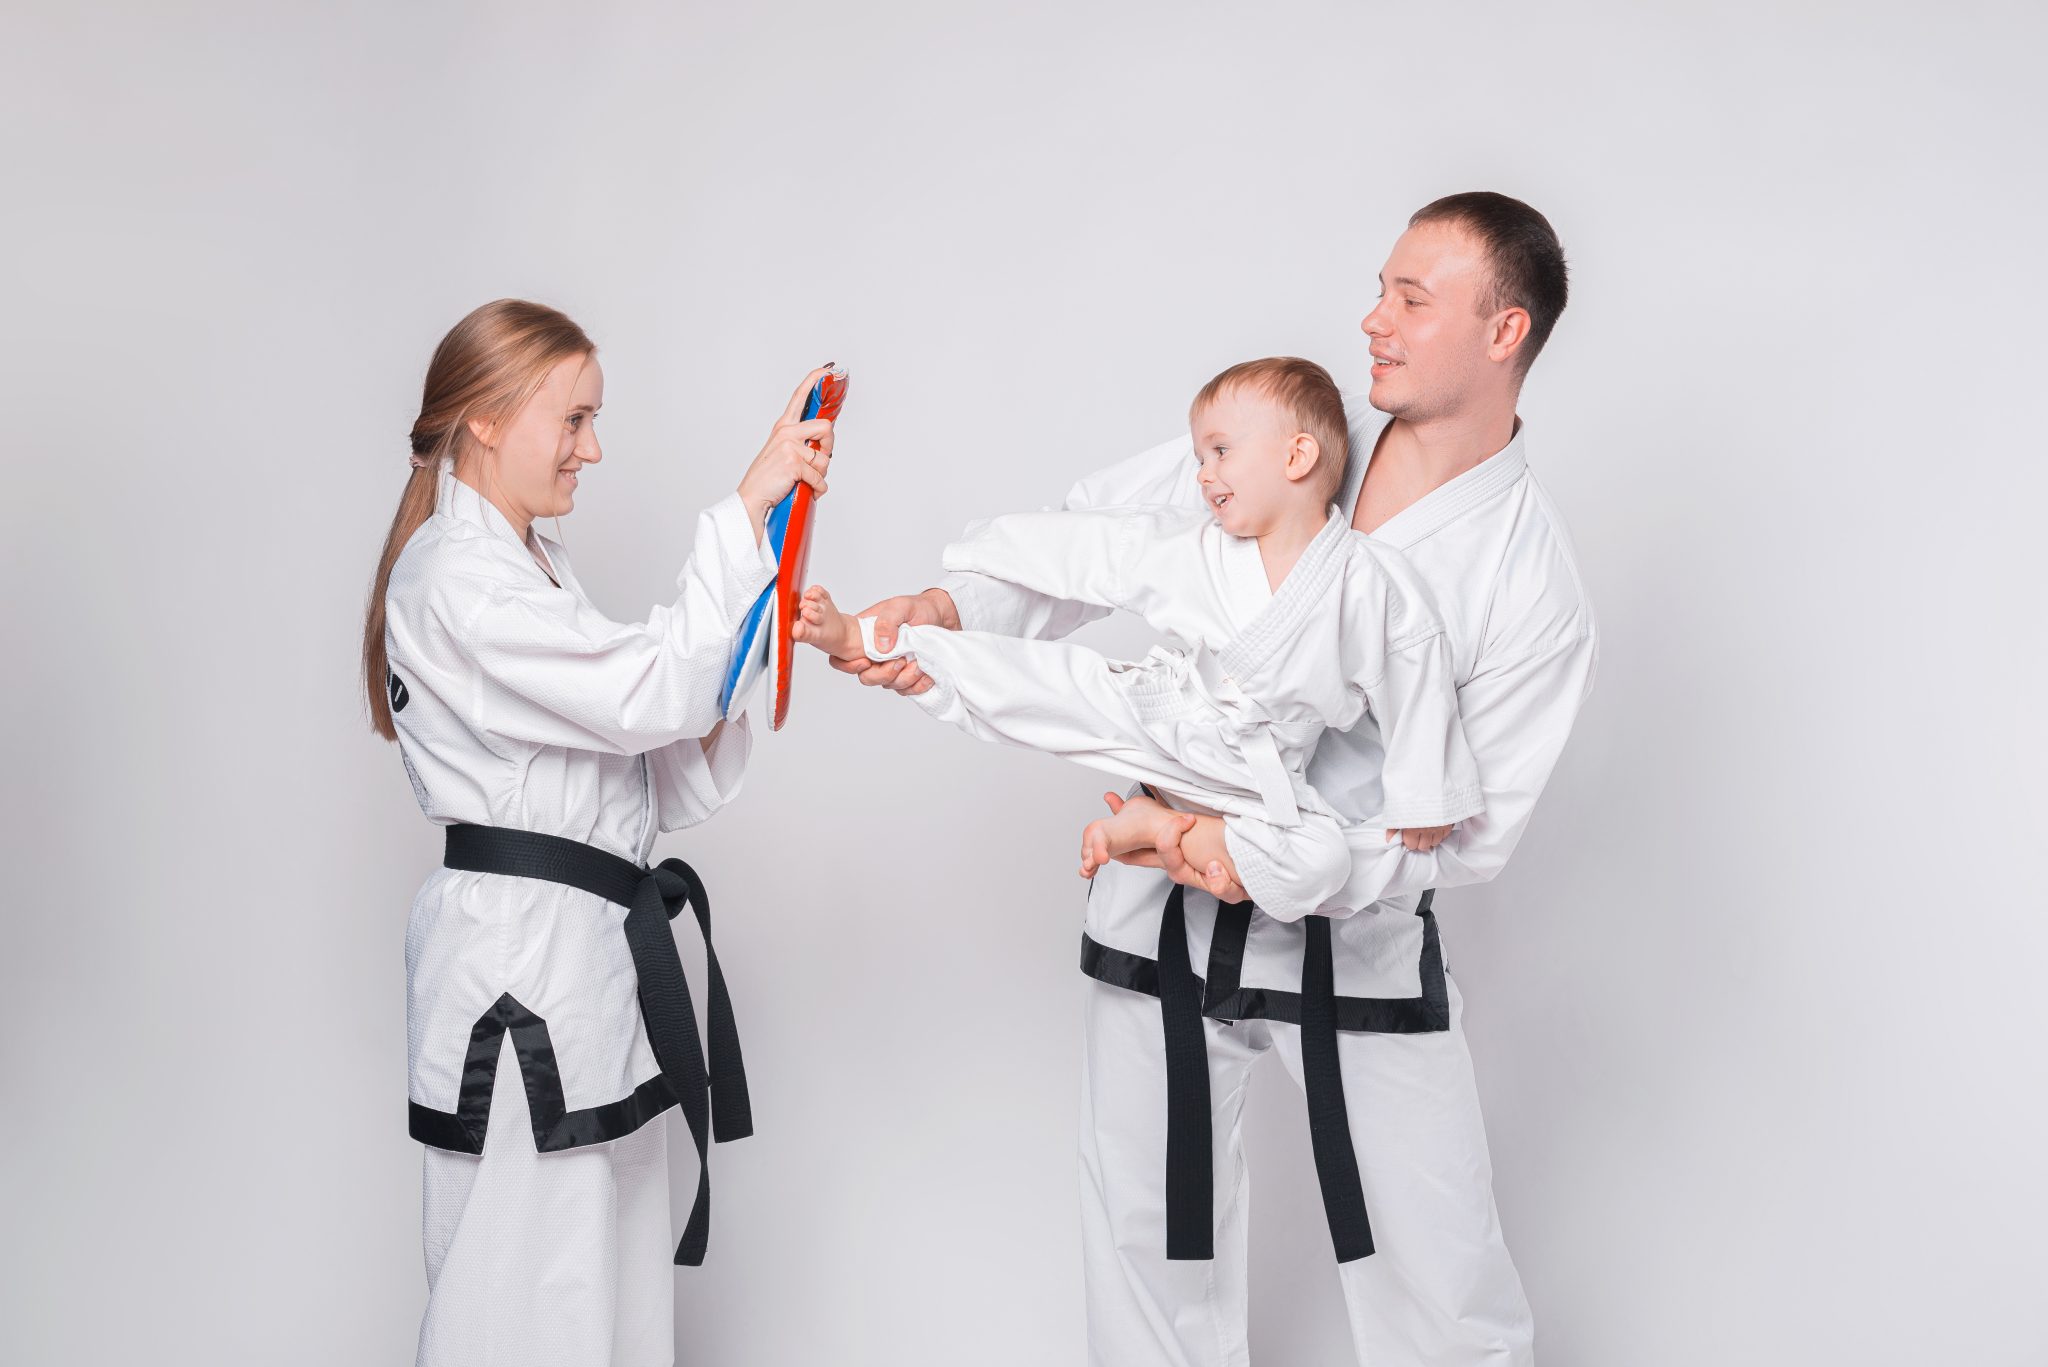 Taekwondo After School Program for Kids